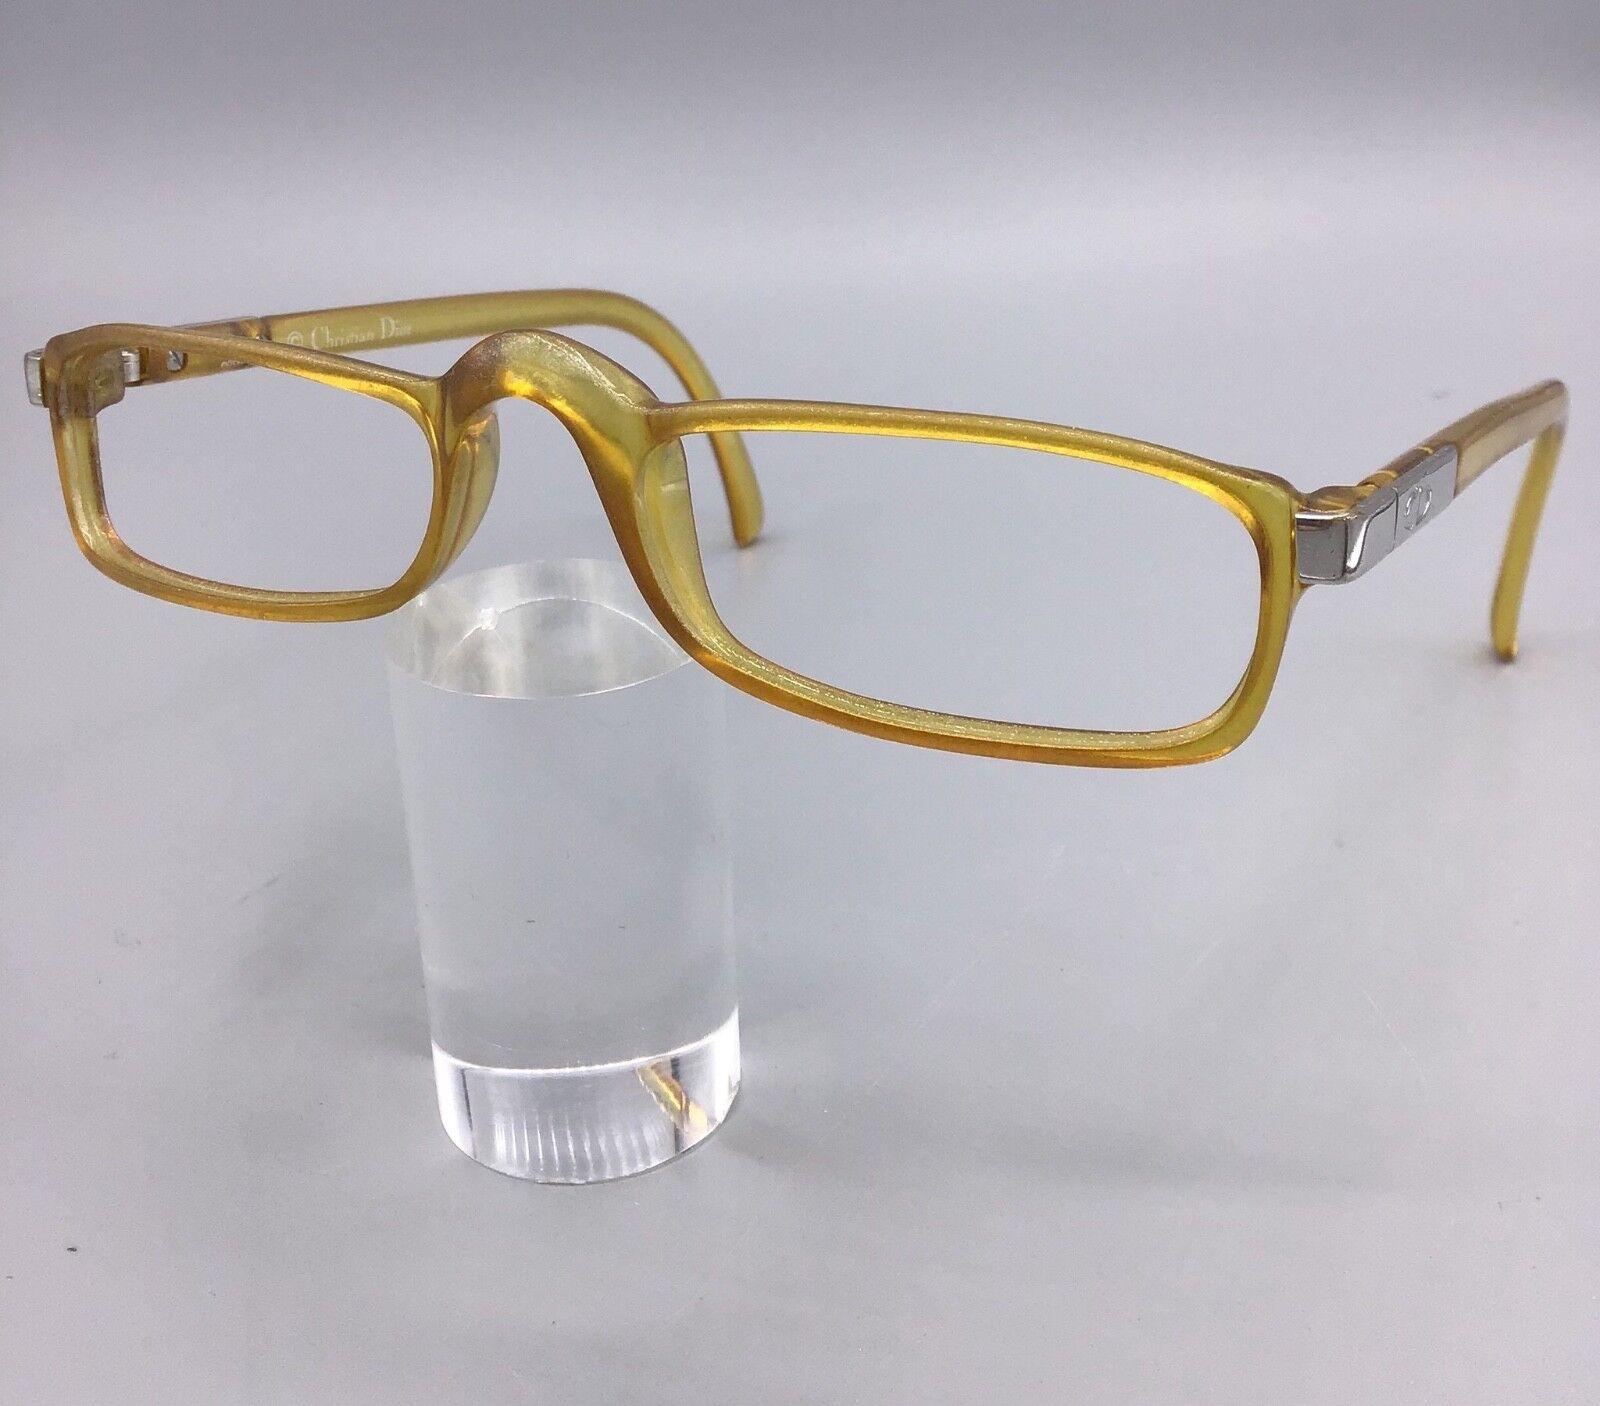 Christian Dior occhiale da sole vintage modello 2116 30 eyewear glasses frame lunettes gafas